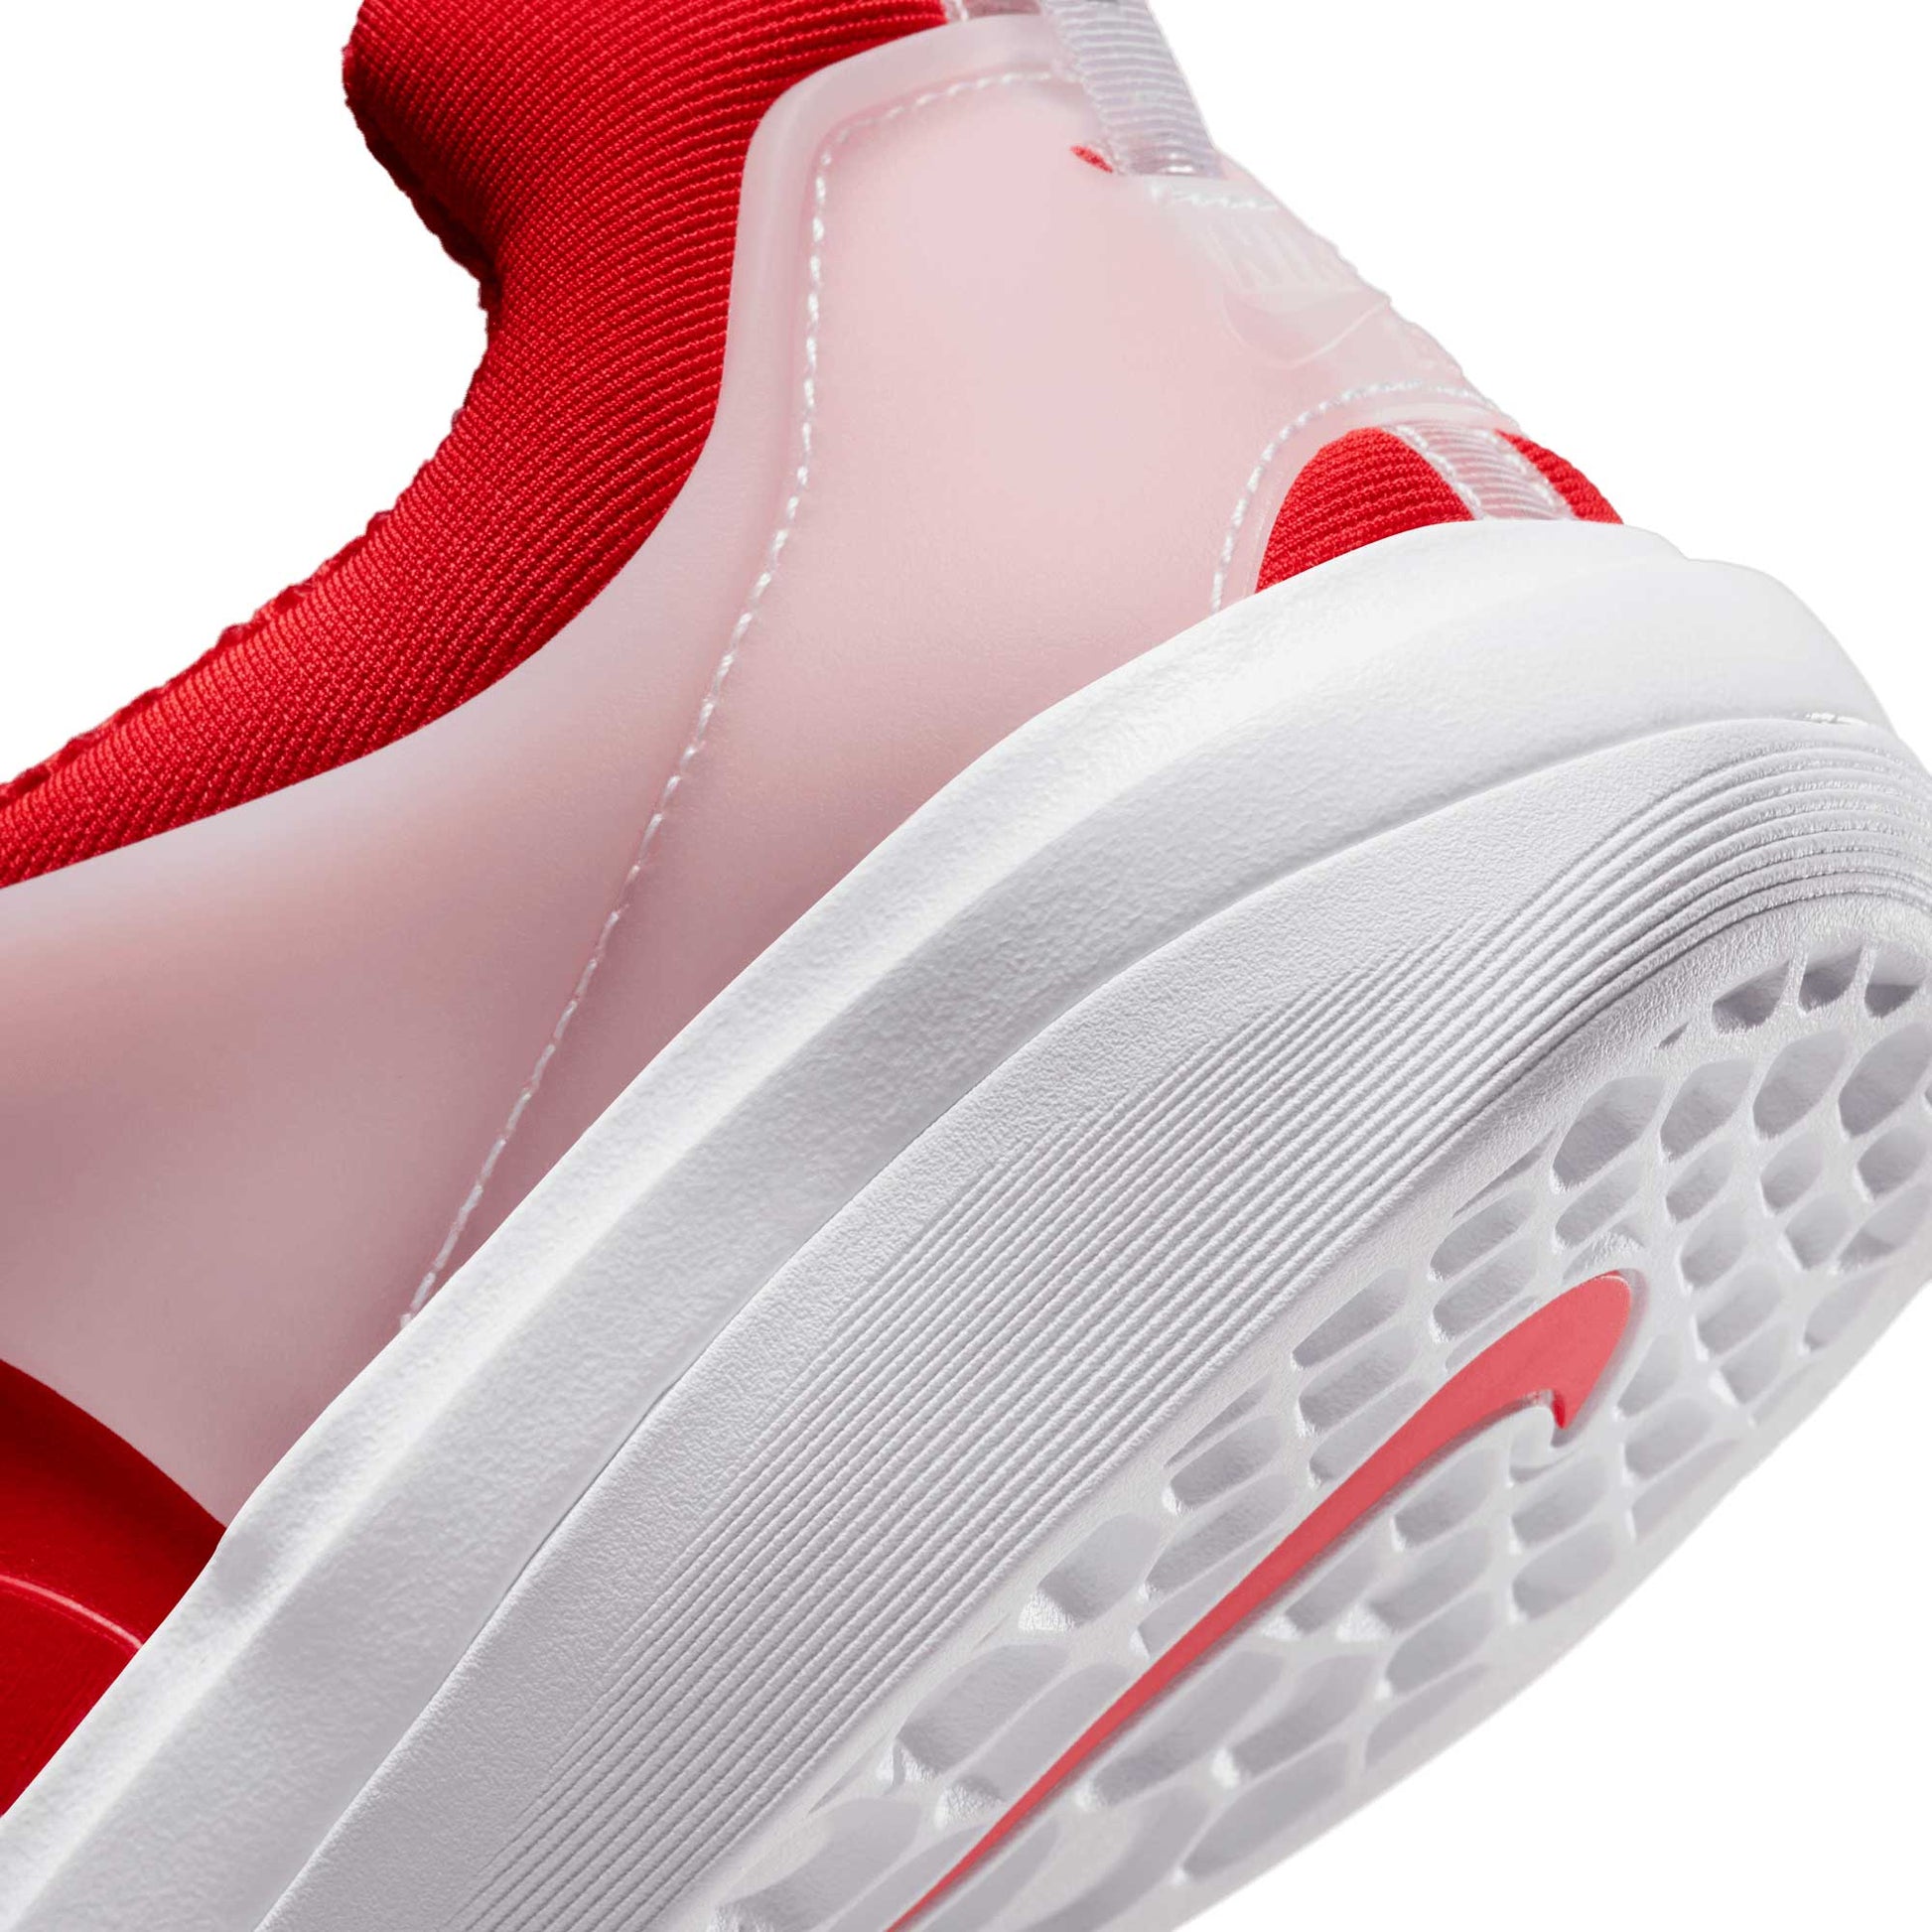 Nike SB Zoom Nyjah 3, university red/white-university red - Tiki Room Skateboards - 11